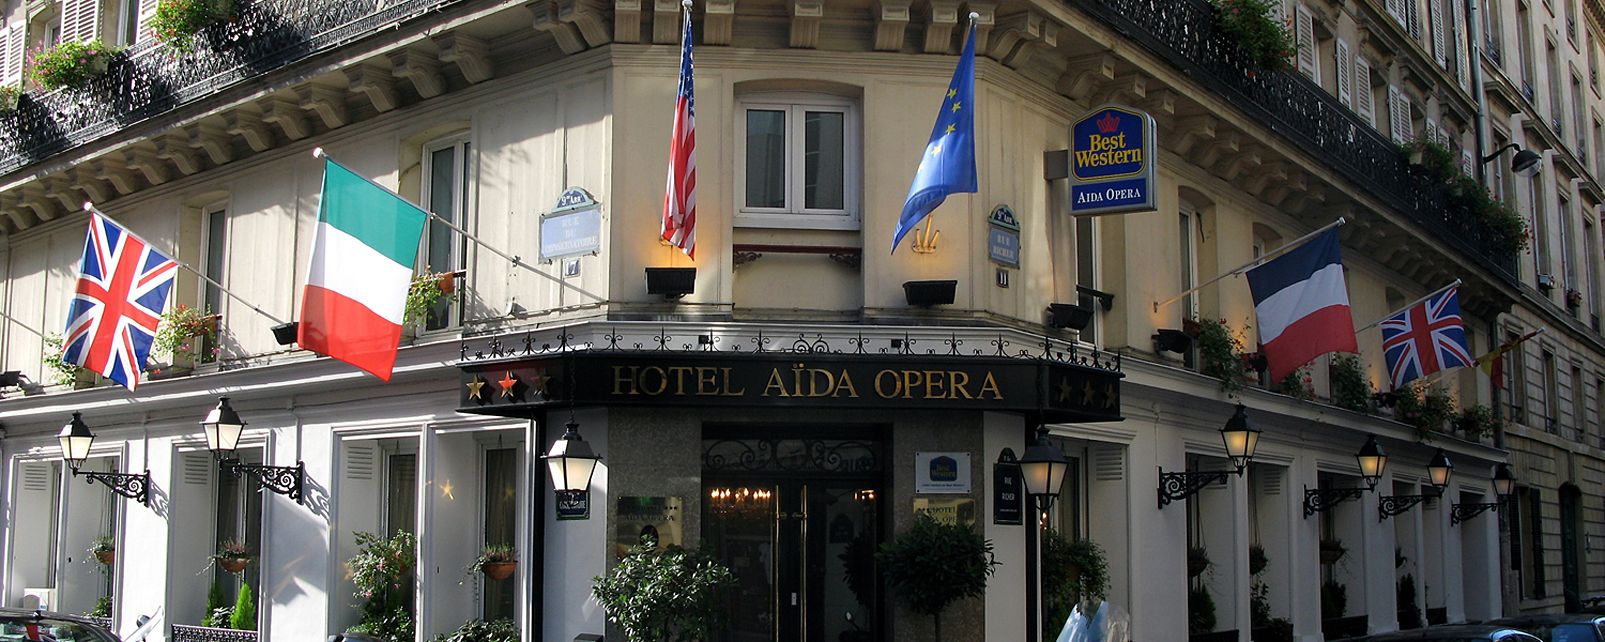 Vacation Hub International - VHI - Travel Club - Aida Opera Hotel